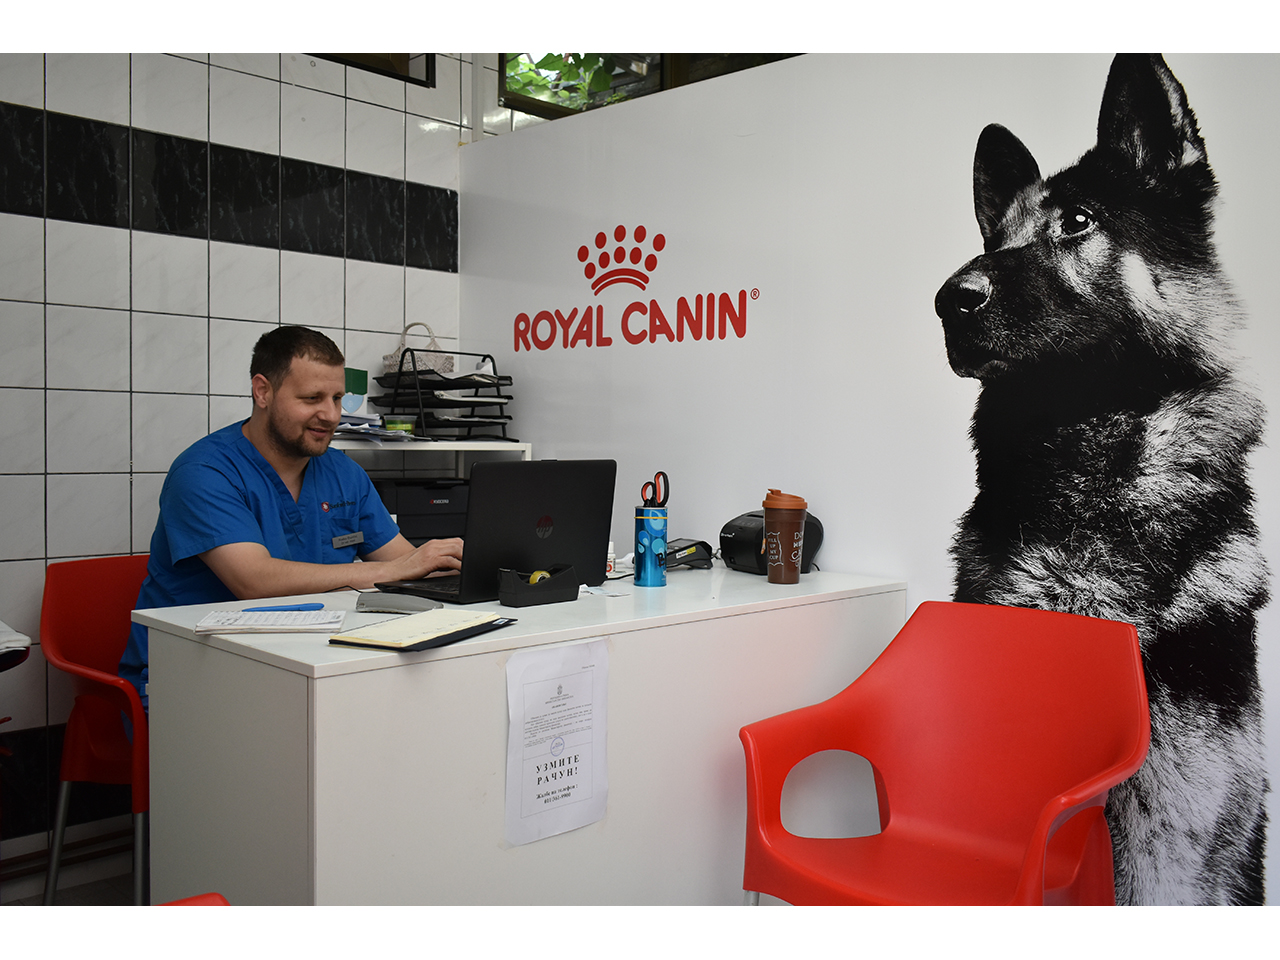 VETVIZIJA - VETERINARY OFFICE AND GROOMING Veterinary clinics, veterinarians Beograd